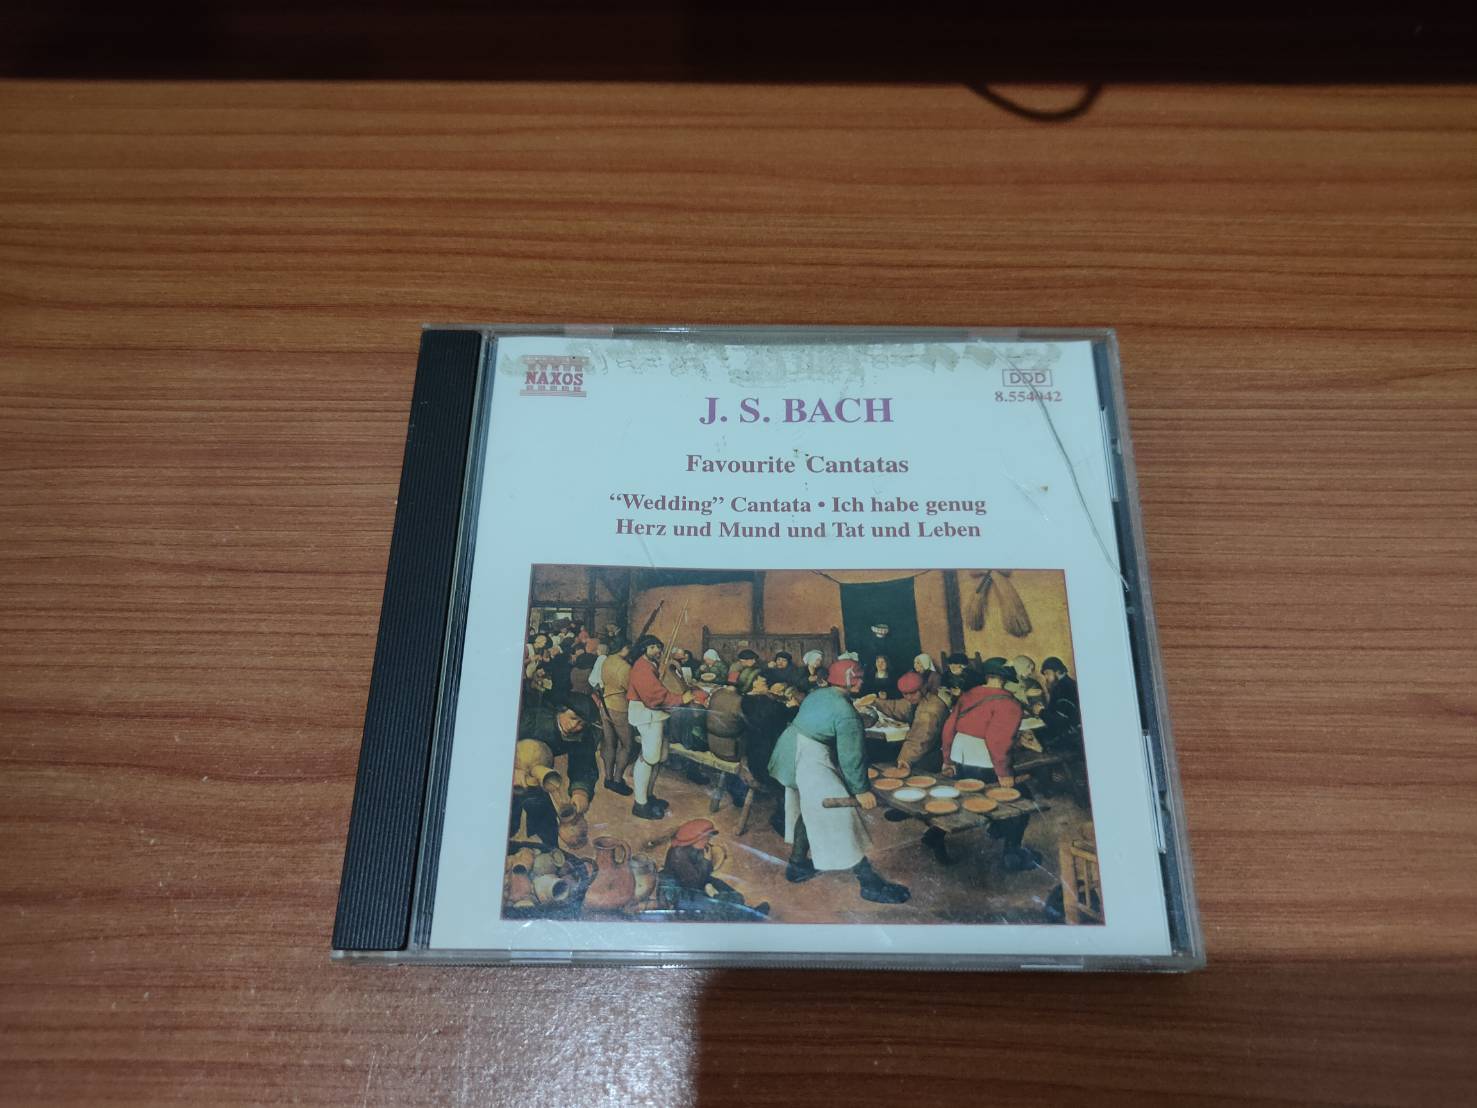 CD.MUSIC ซีดีเพลง เพลงสากล   J.S.BACH  Favourite Cantatas